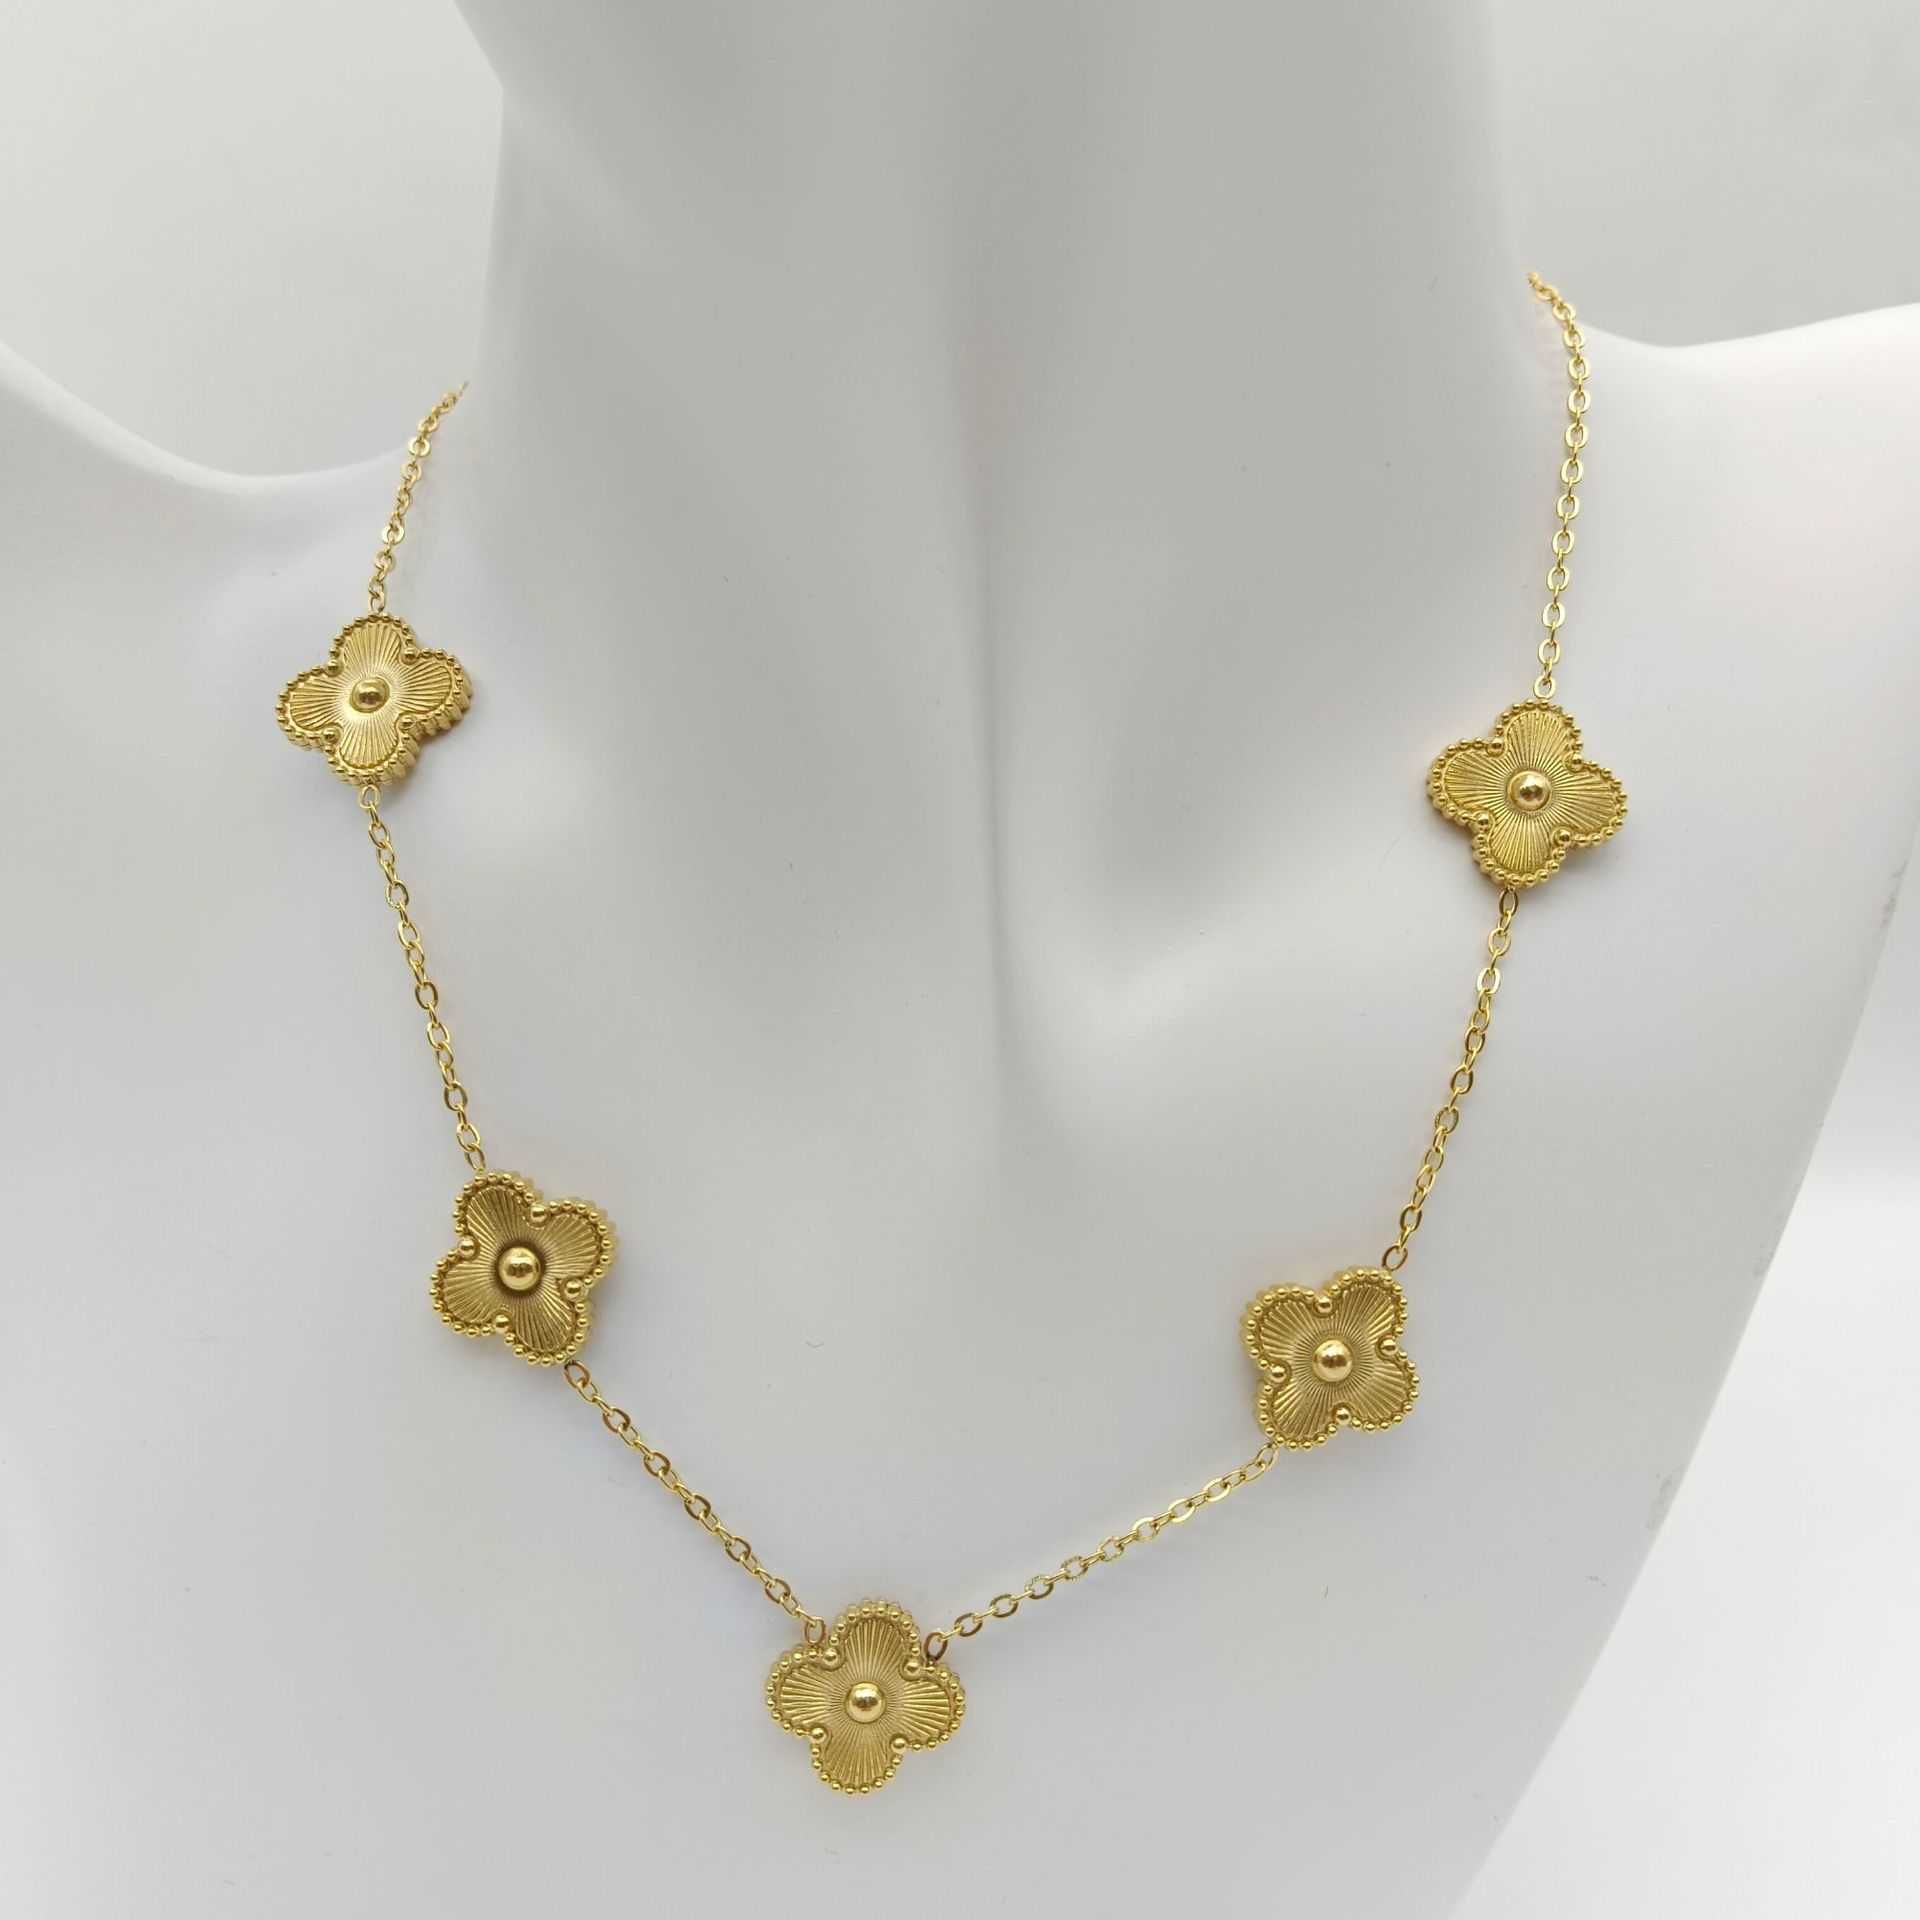 Golden Five Clover Necklace